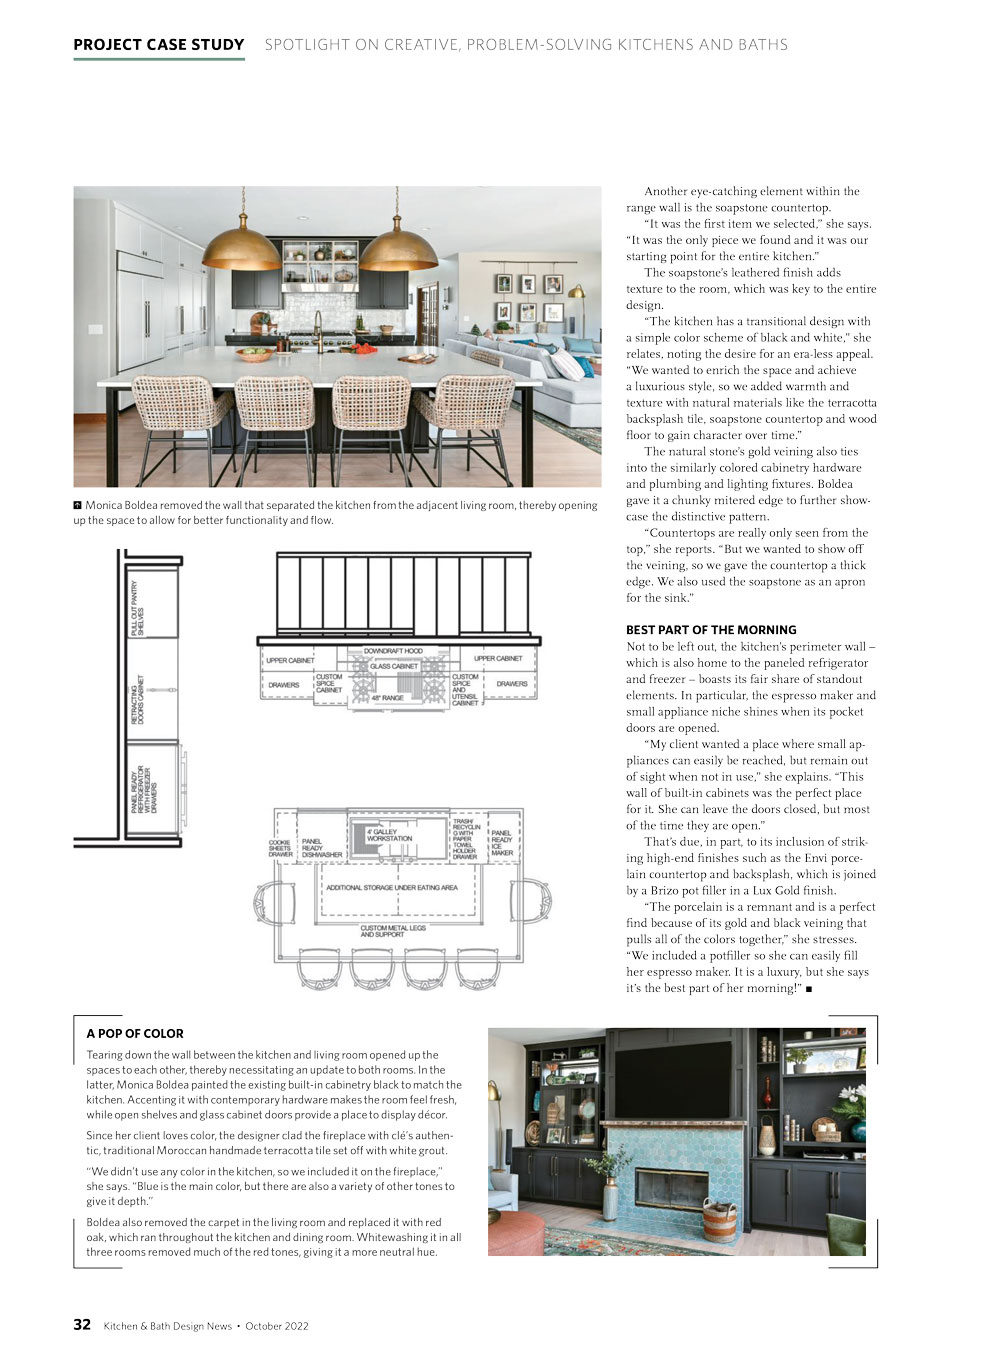 Modular Burners - Kitchen & Bath Design News